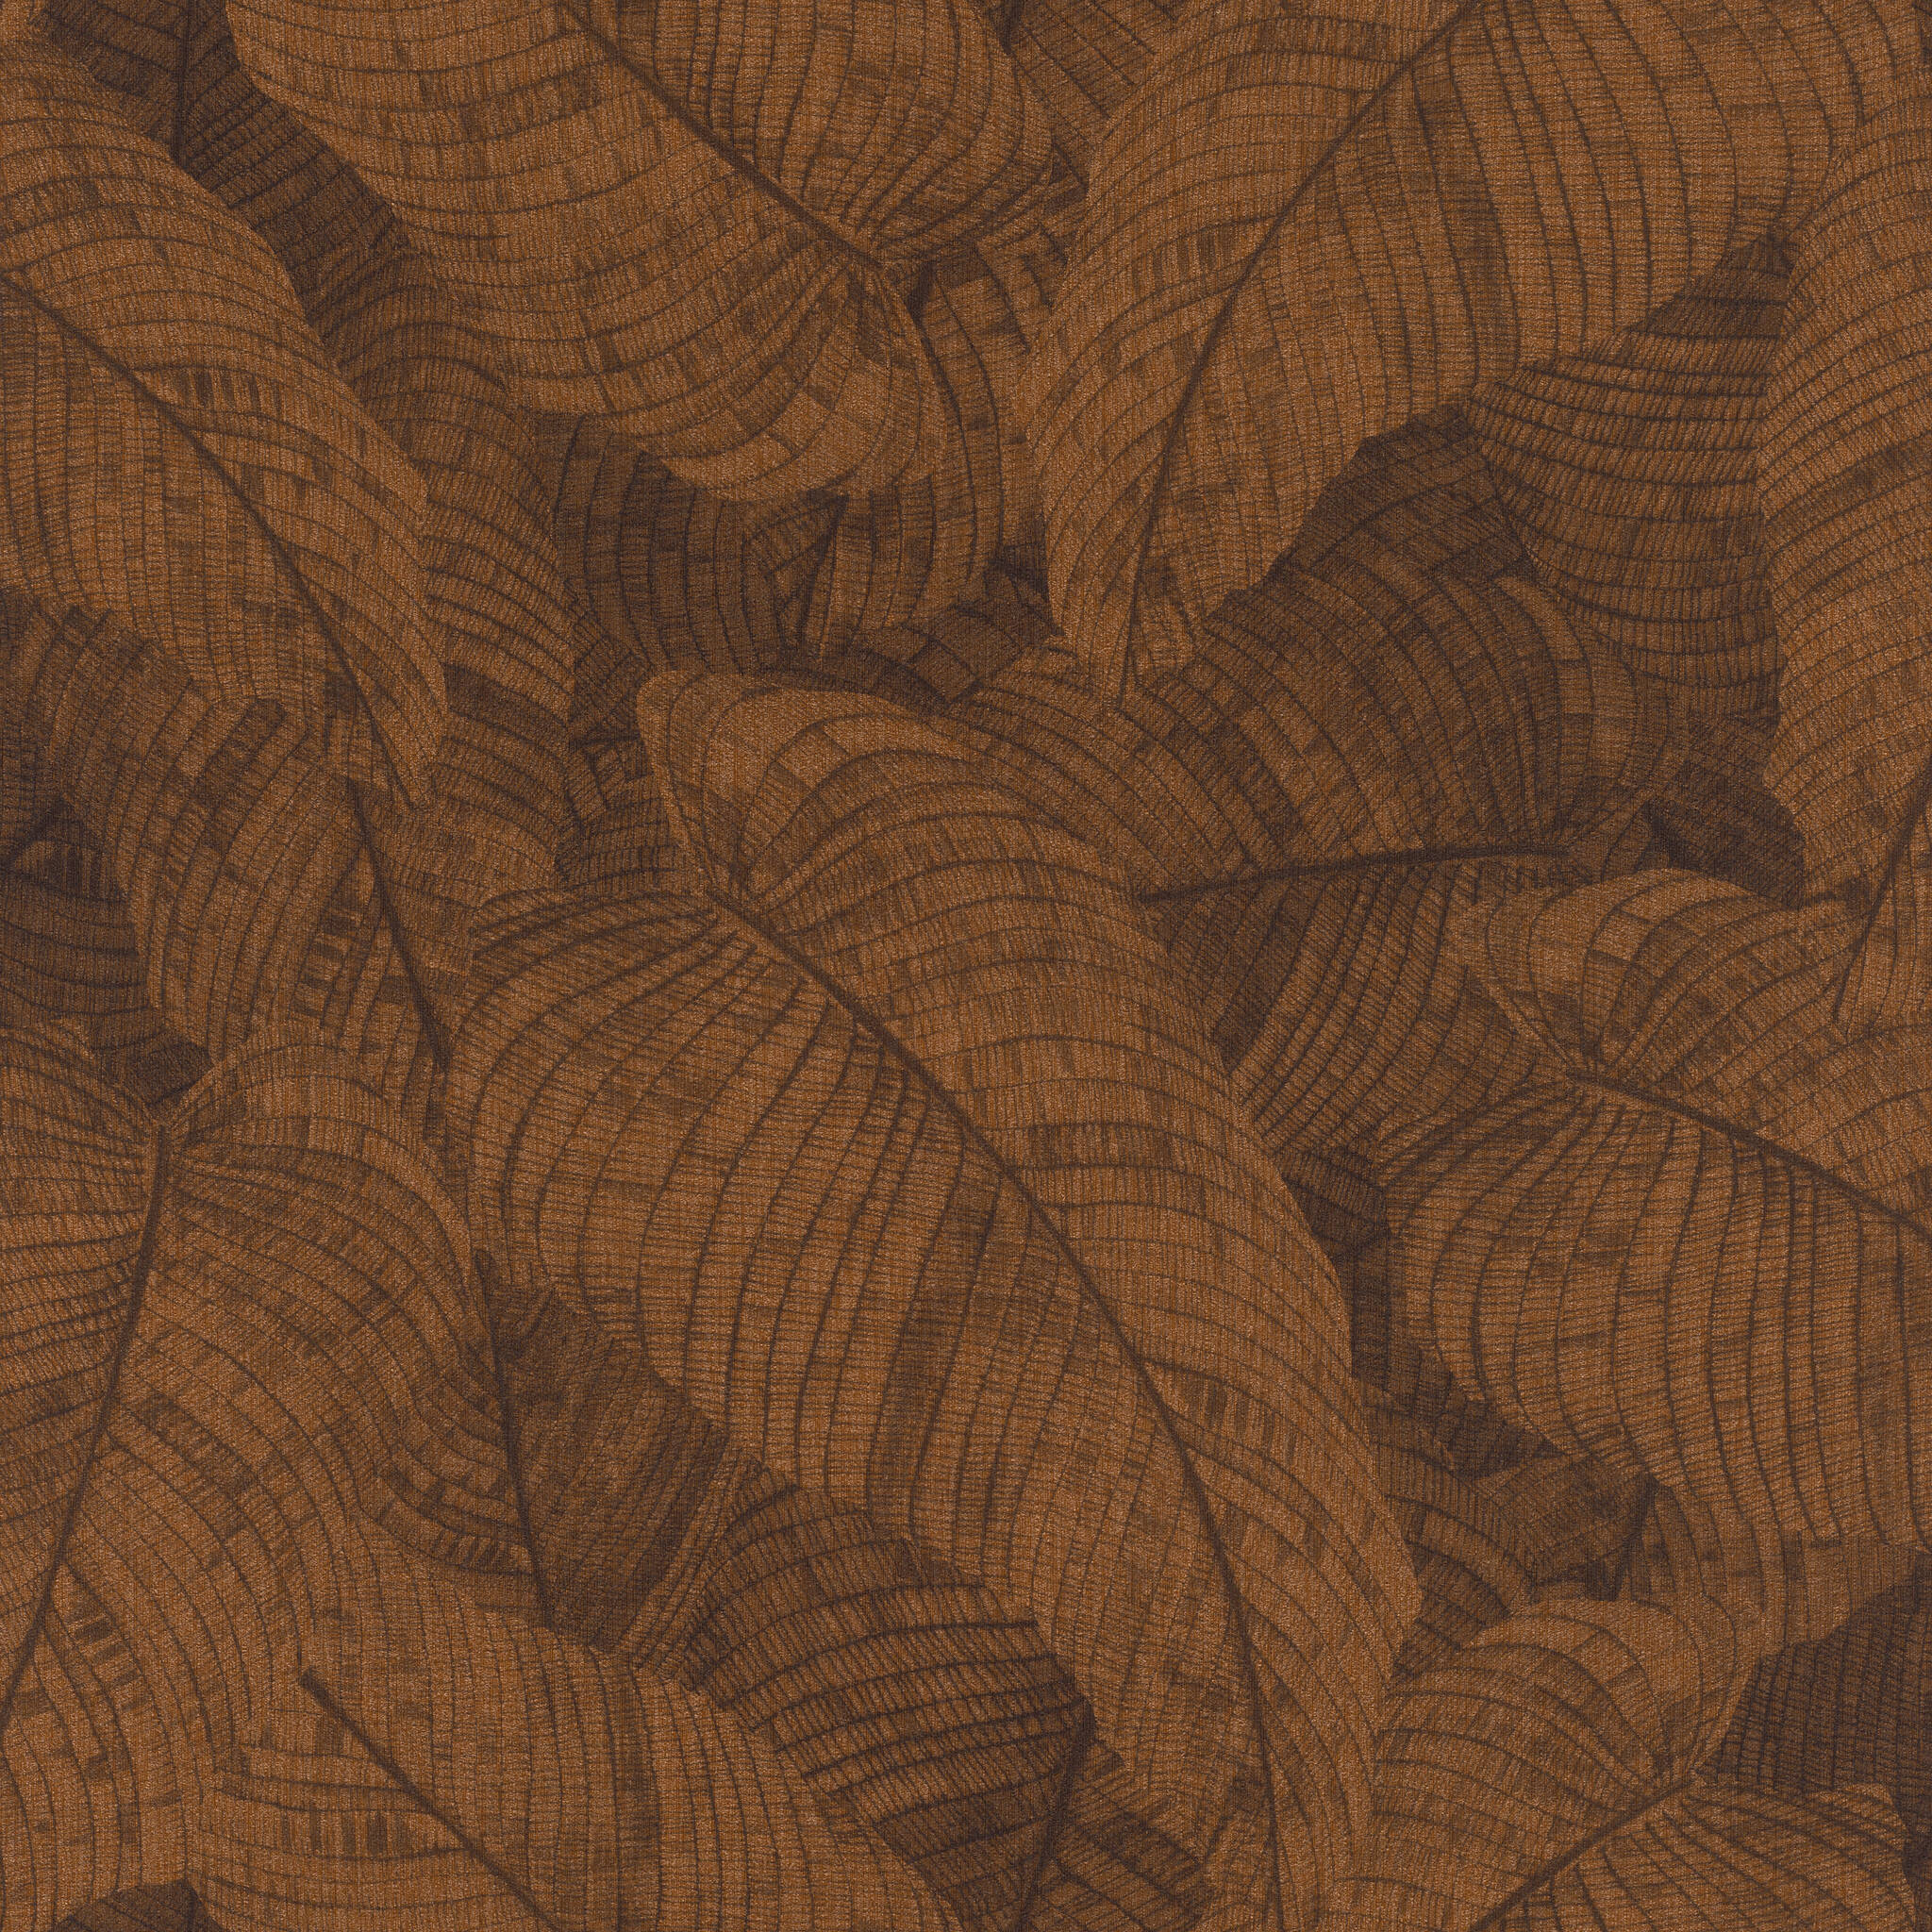 Blätter Vliestapete in Braun-Messing dunkel Amara 720563